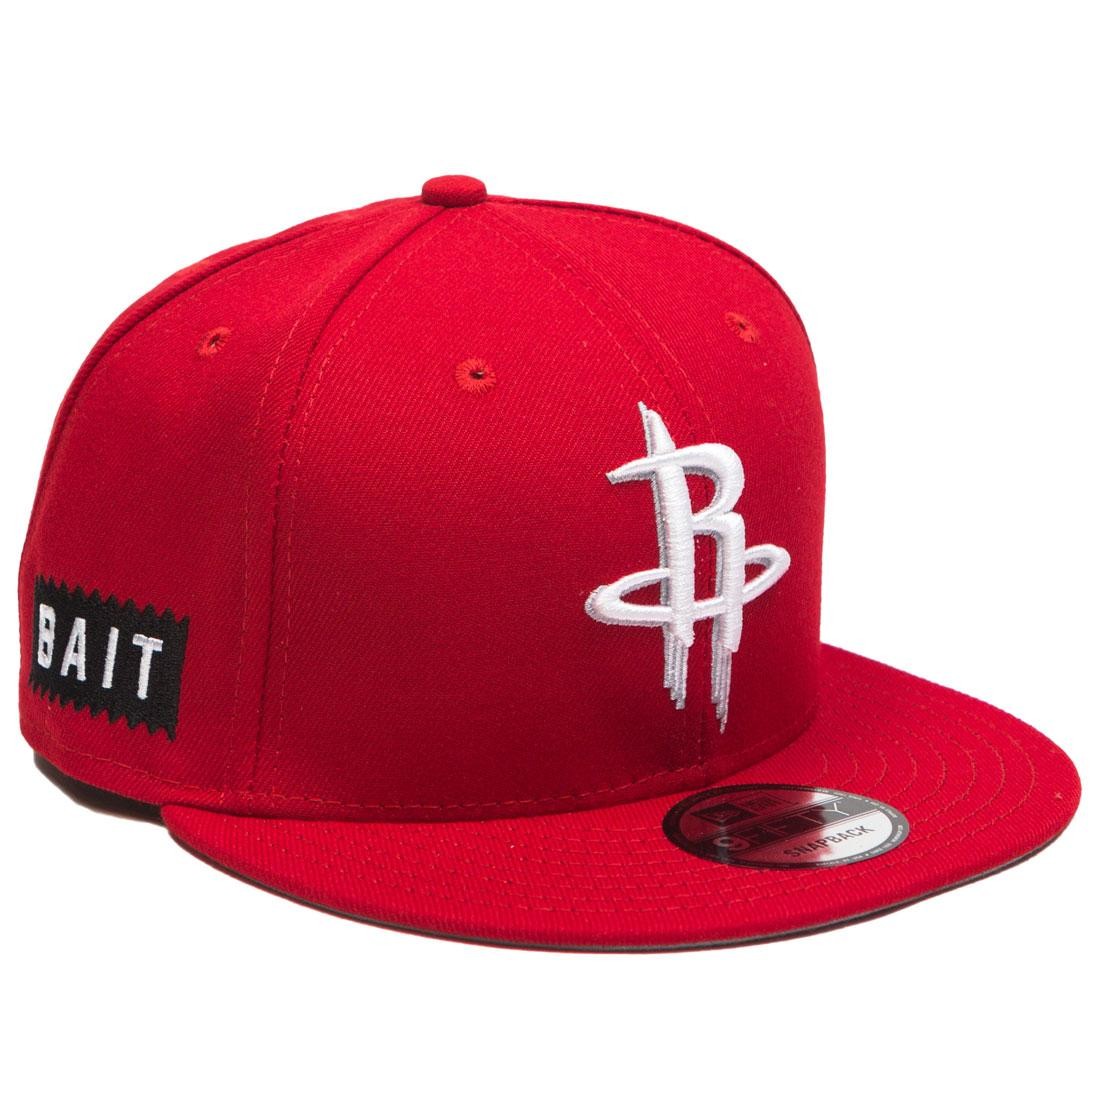 Cheap Cerbe Jordan Outlet x NBA X New Era 9Fifty Houston Rockets Scarlet Snapback Cap (red)